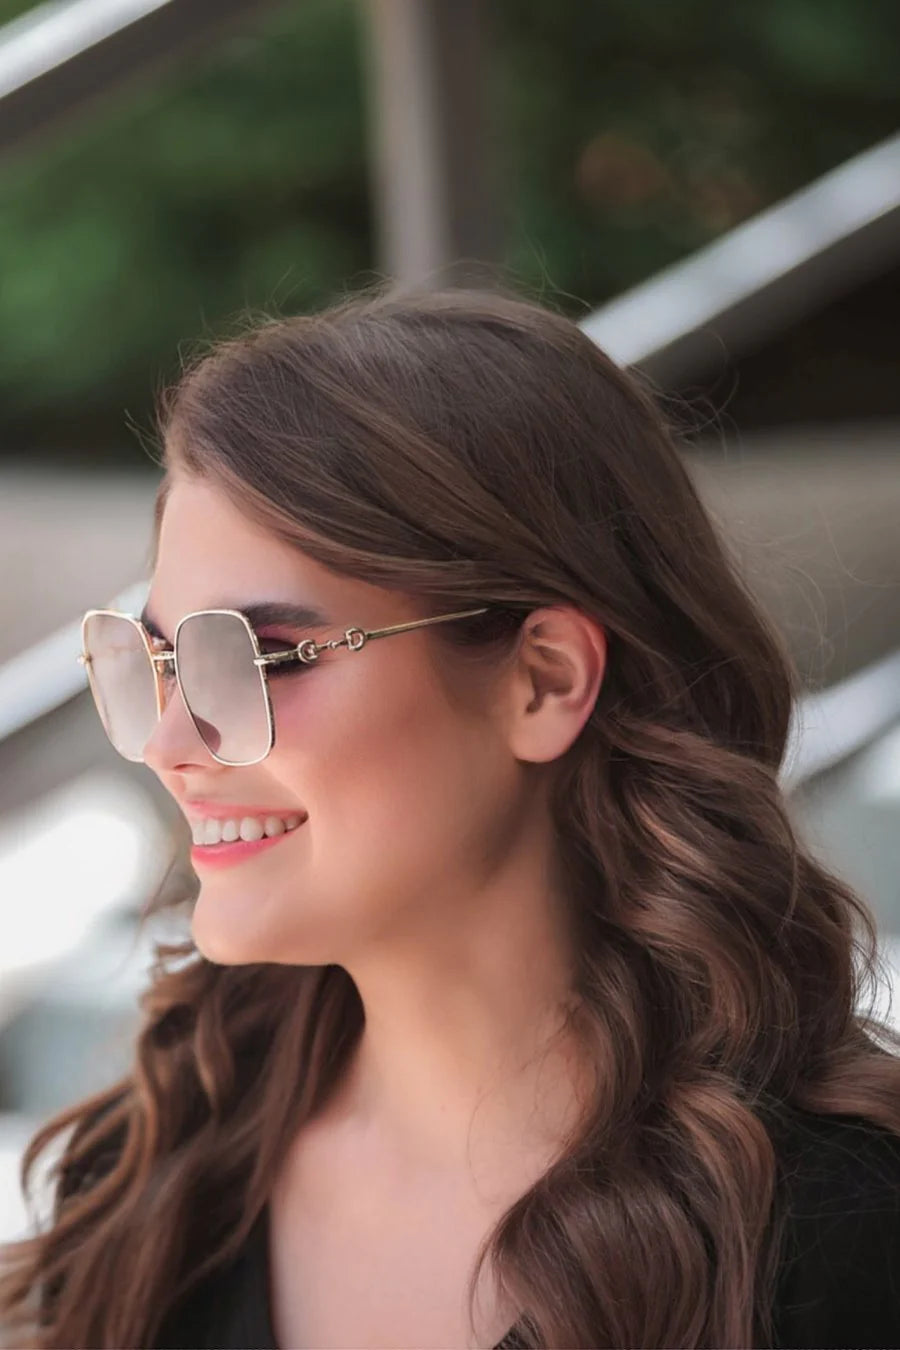 Venice Square Framed Sunglasses - Shop women apparel, Jewelry, bath & beauty products online - Arwen's Boutique